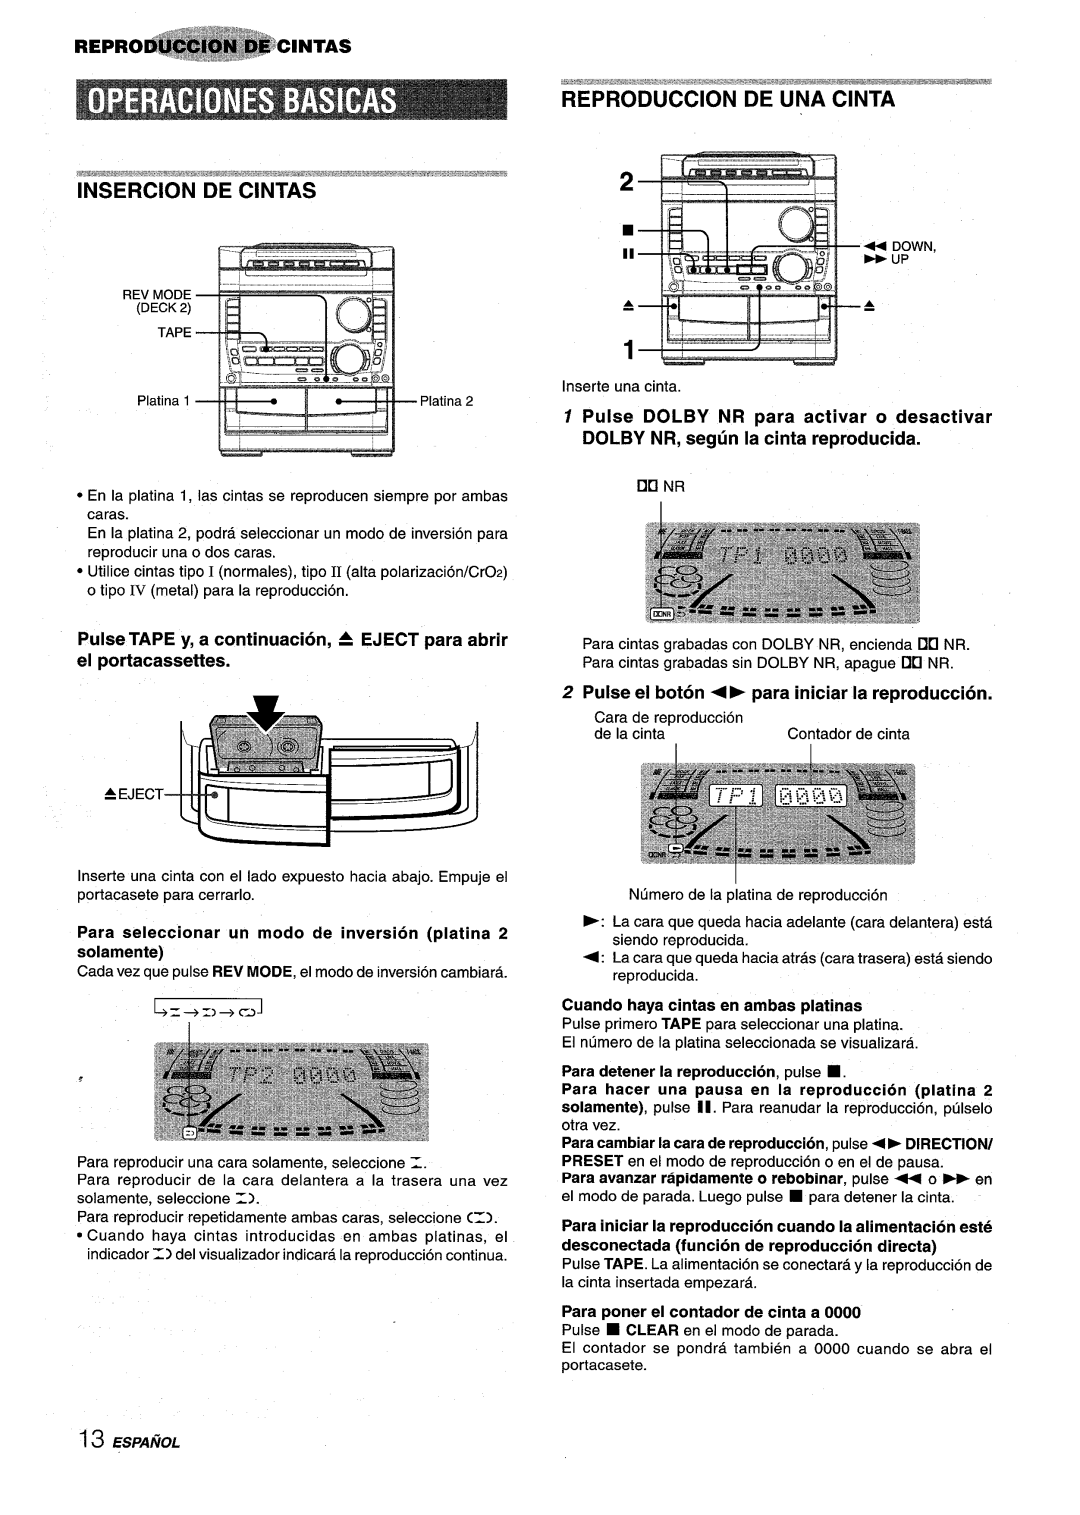 Sony NSX-A959 manual 2 ~.~’’’w”w”’“‘j, Pulse TAPE y, a continuation, A EJECT para abrir el portacassettes, t------- ----= 